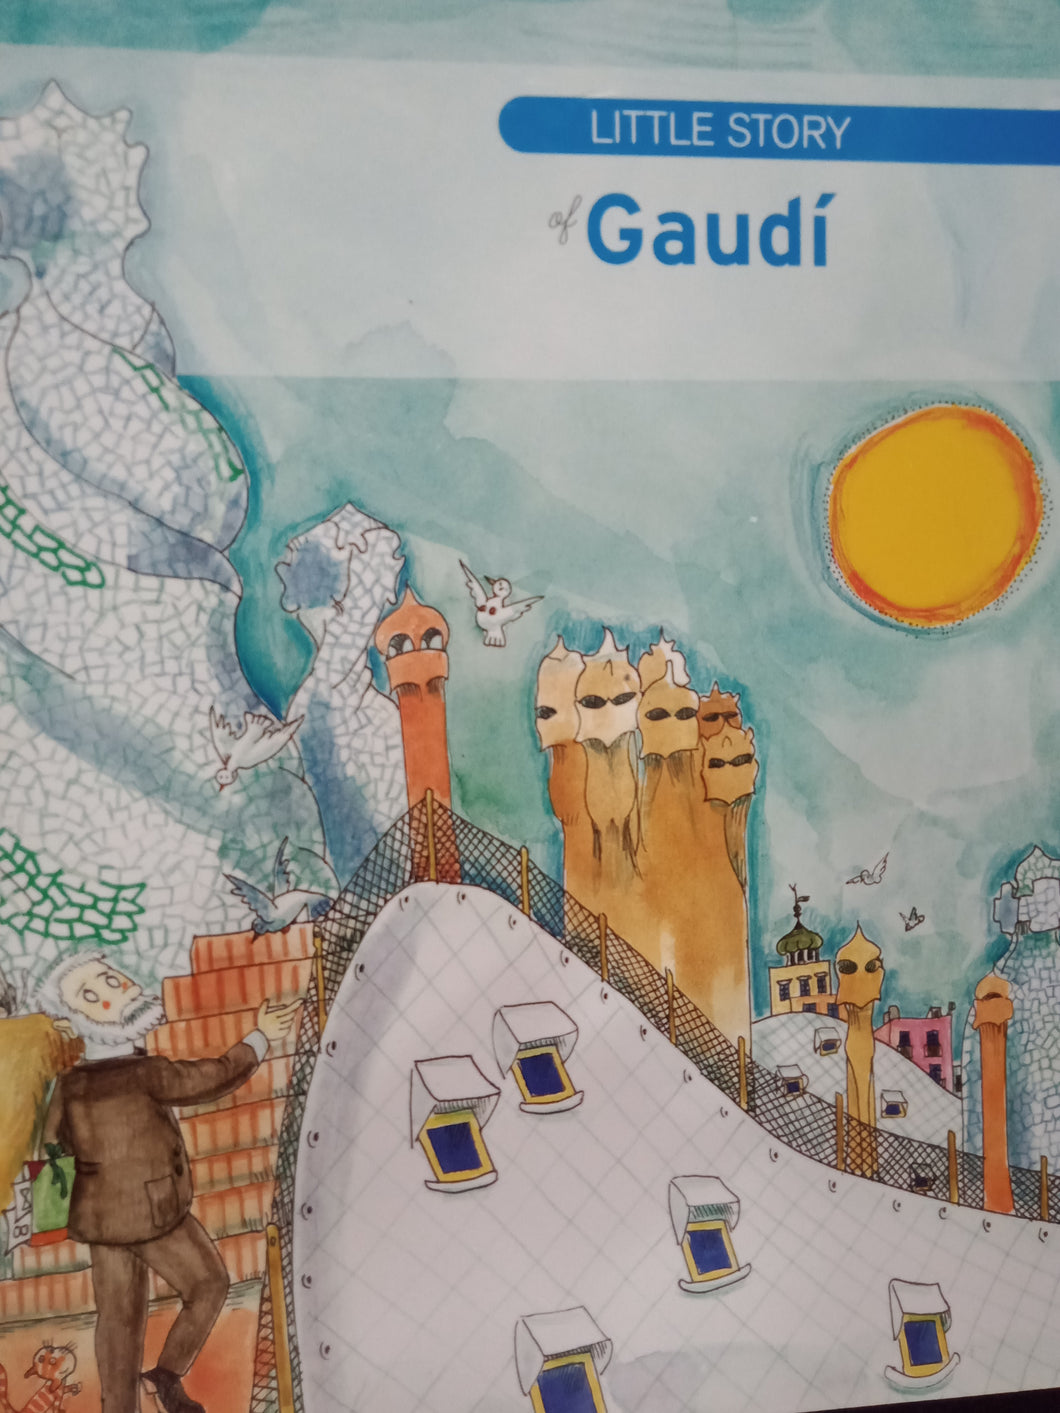 Little Story of Gaudi